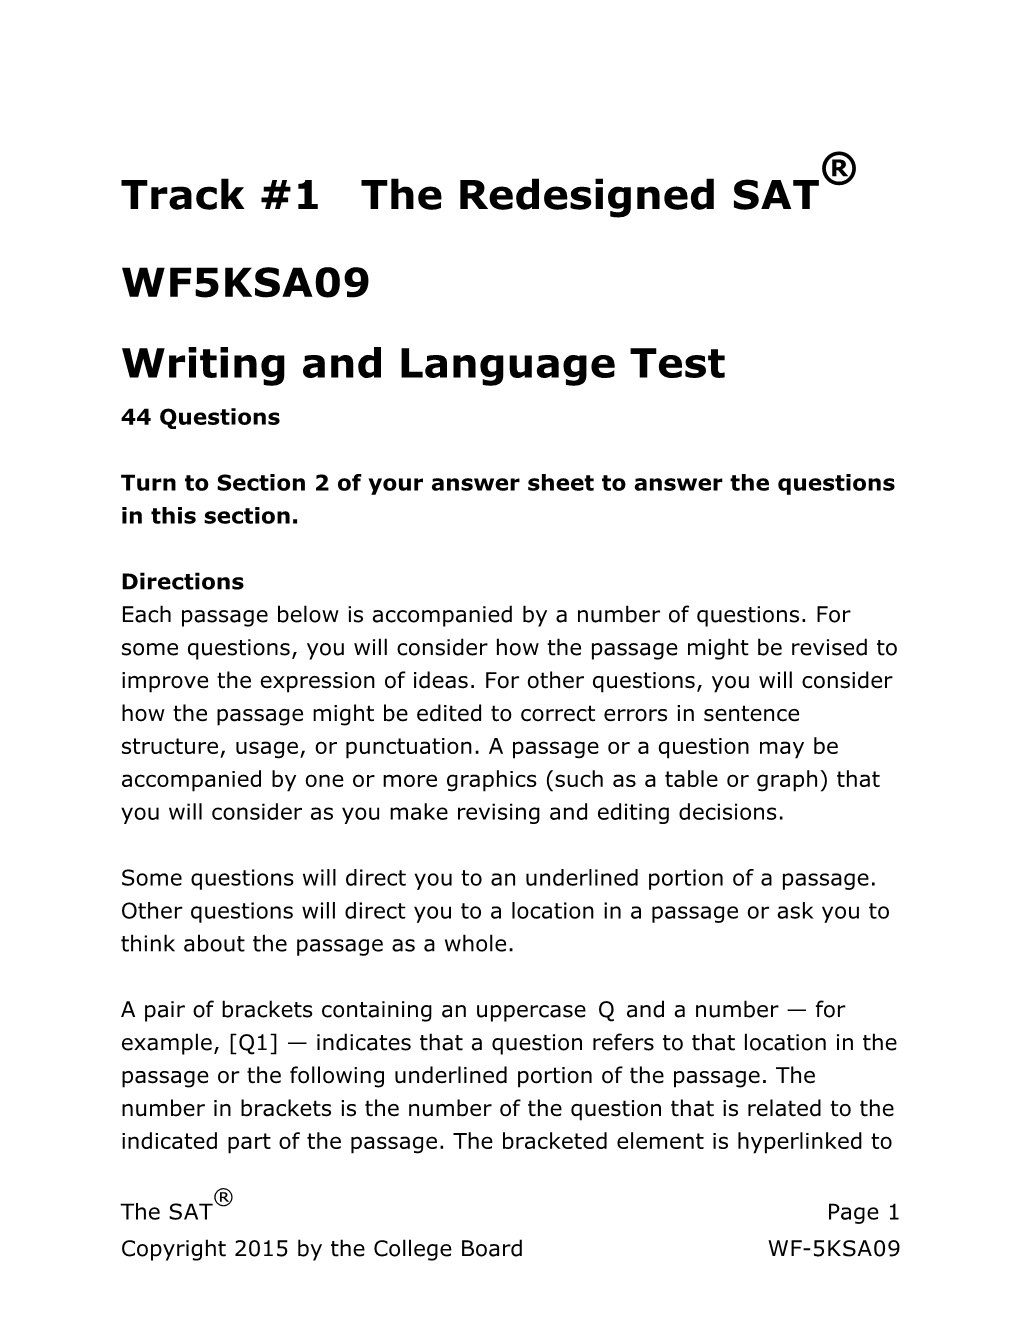 Writing and Language Test